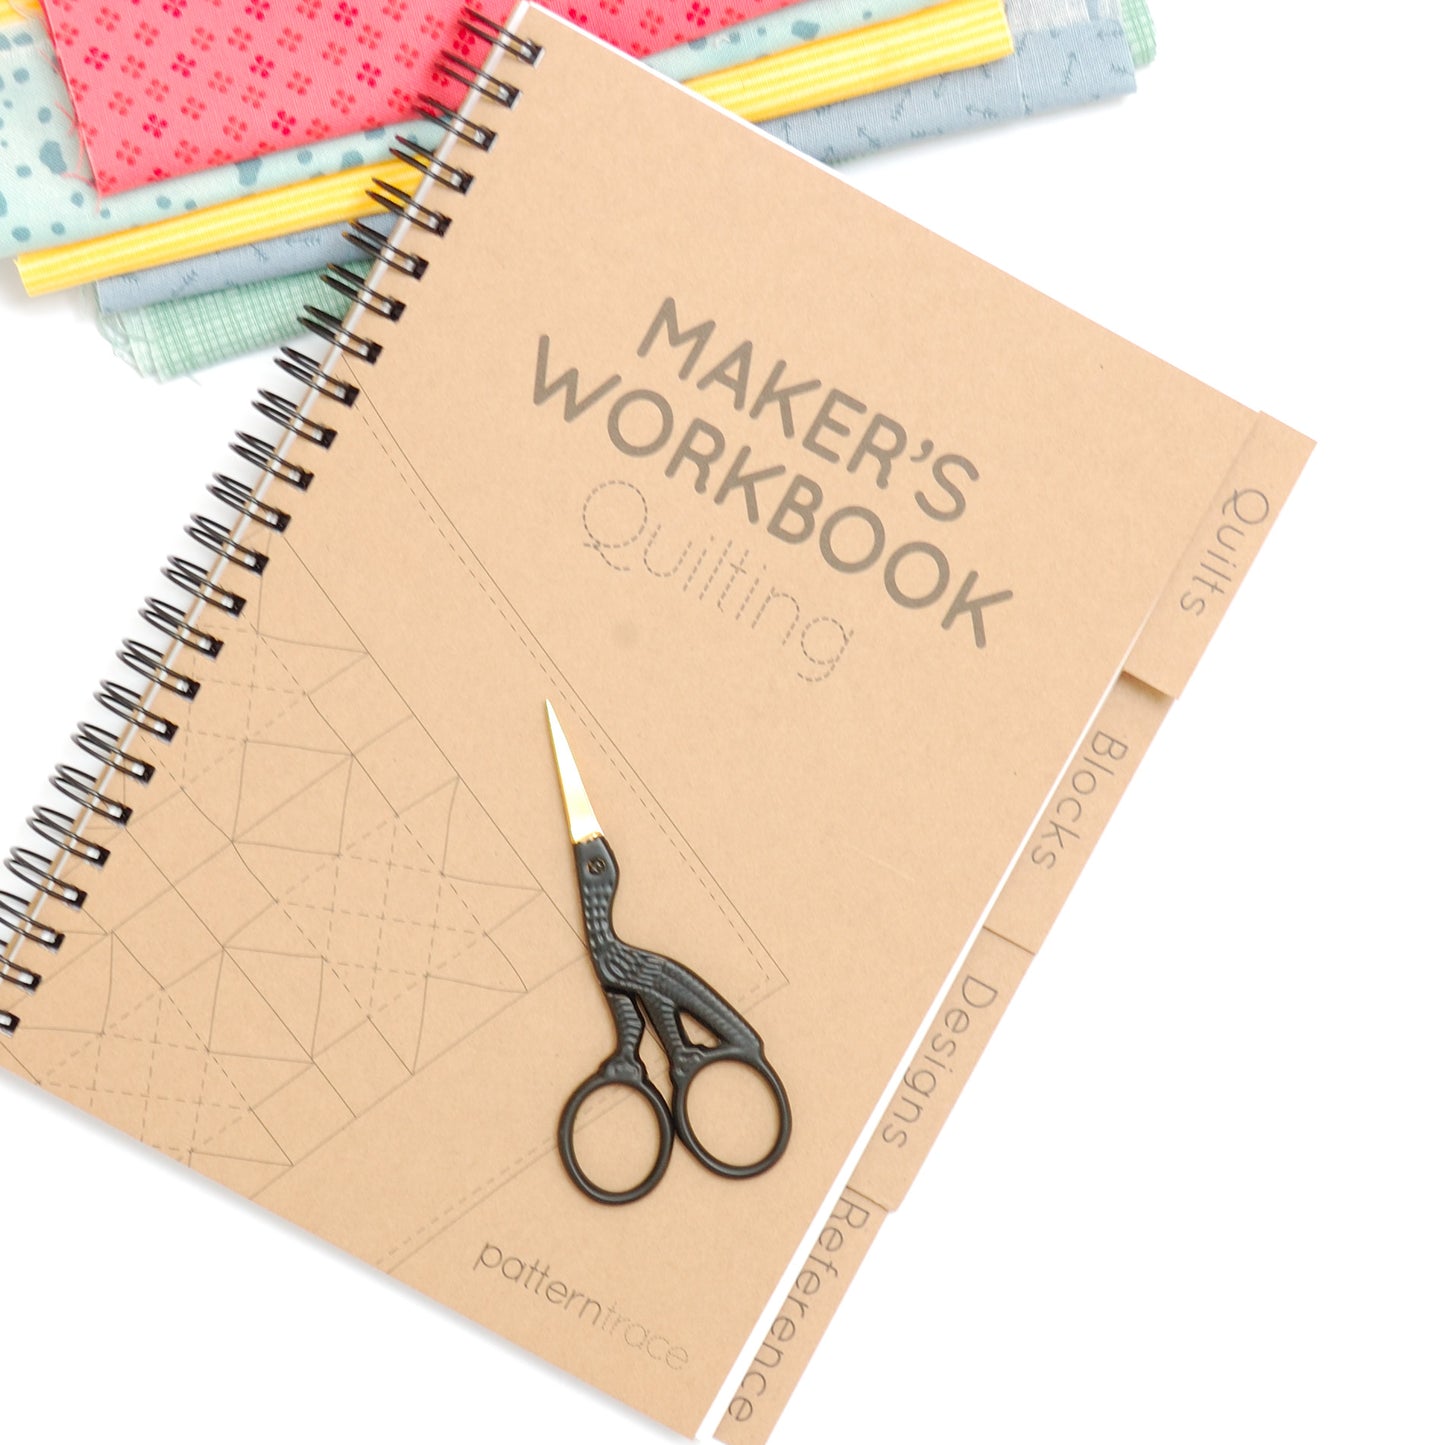 Maker's Workbook Bundle